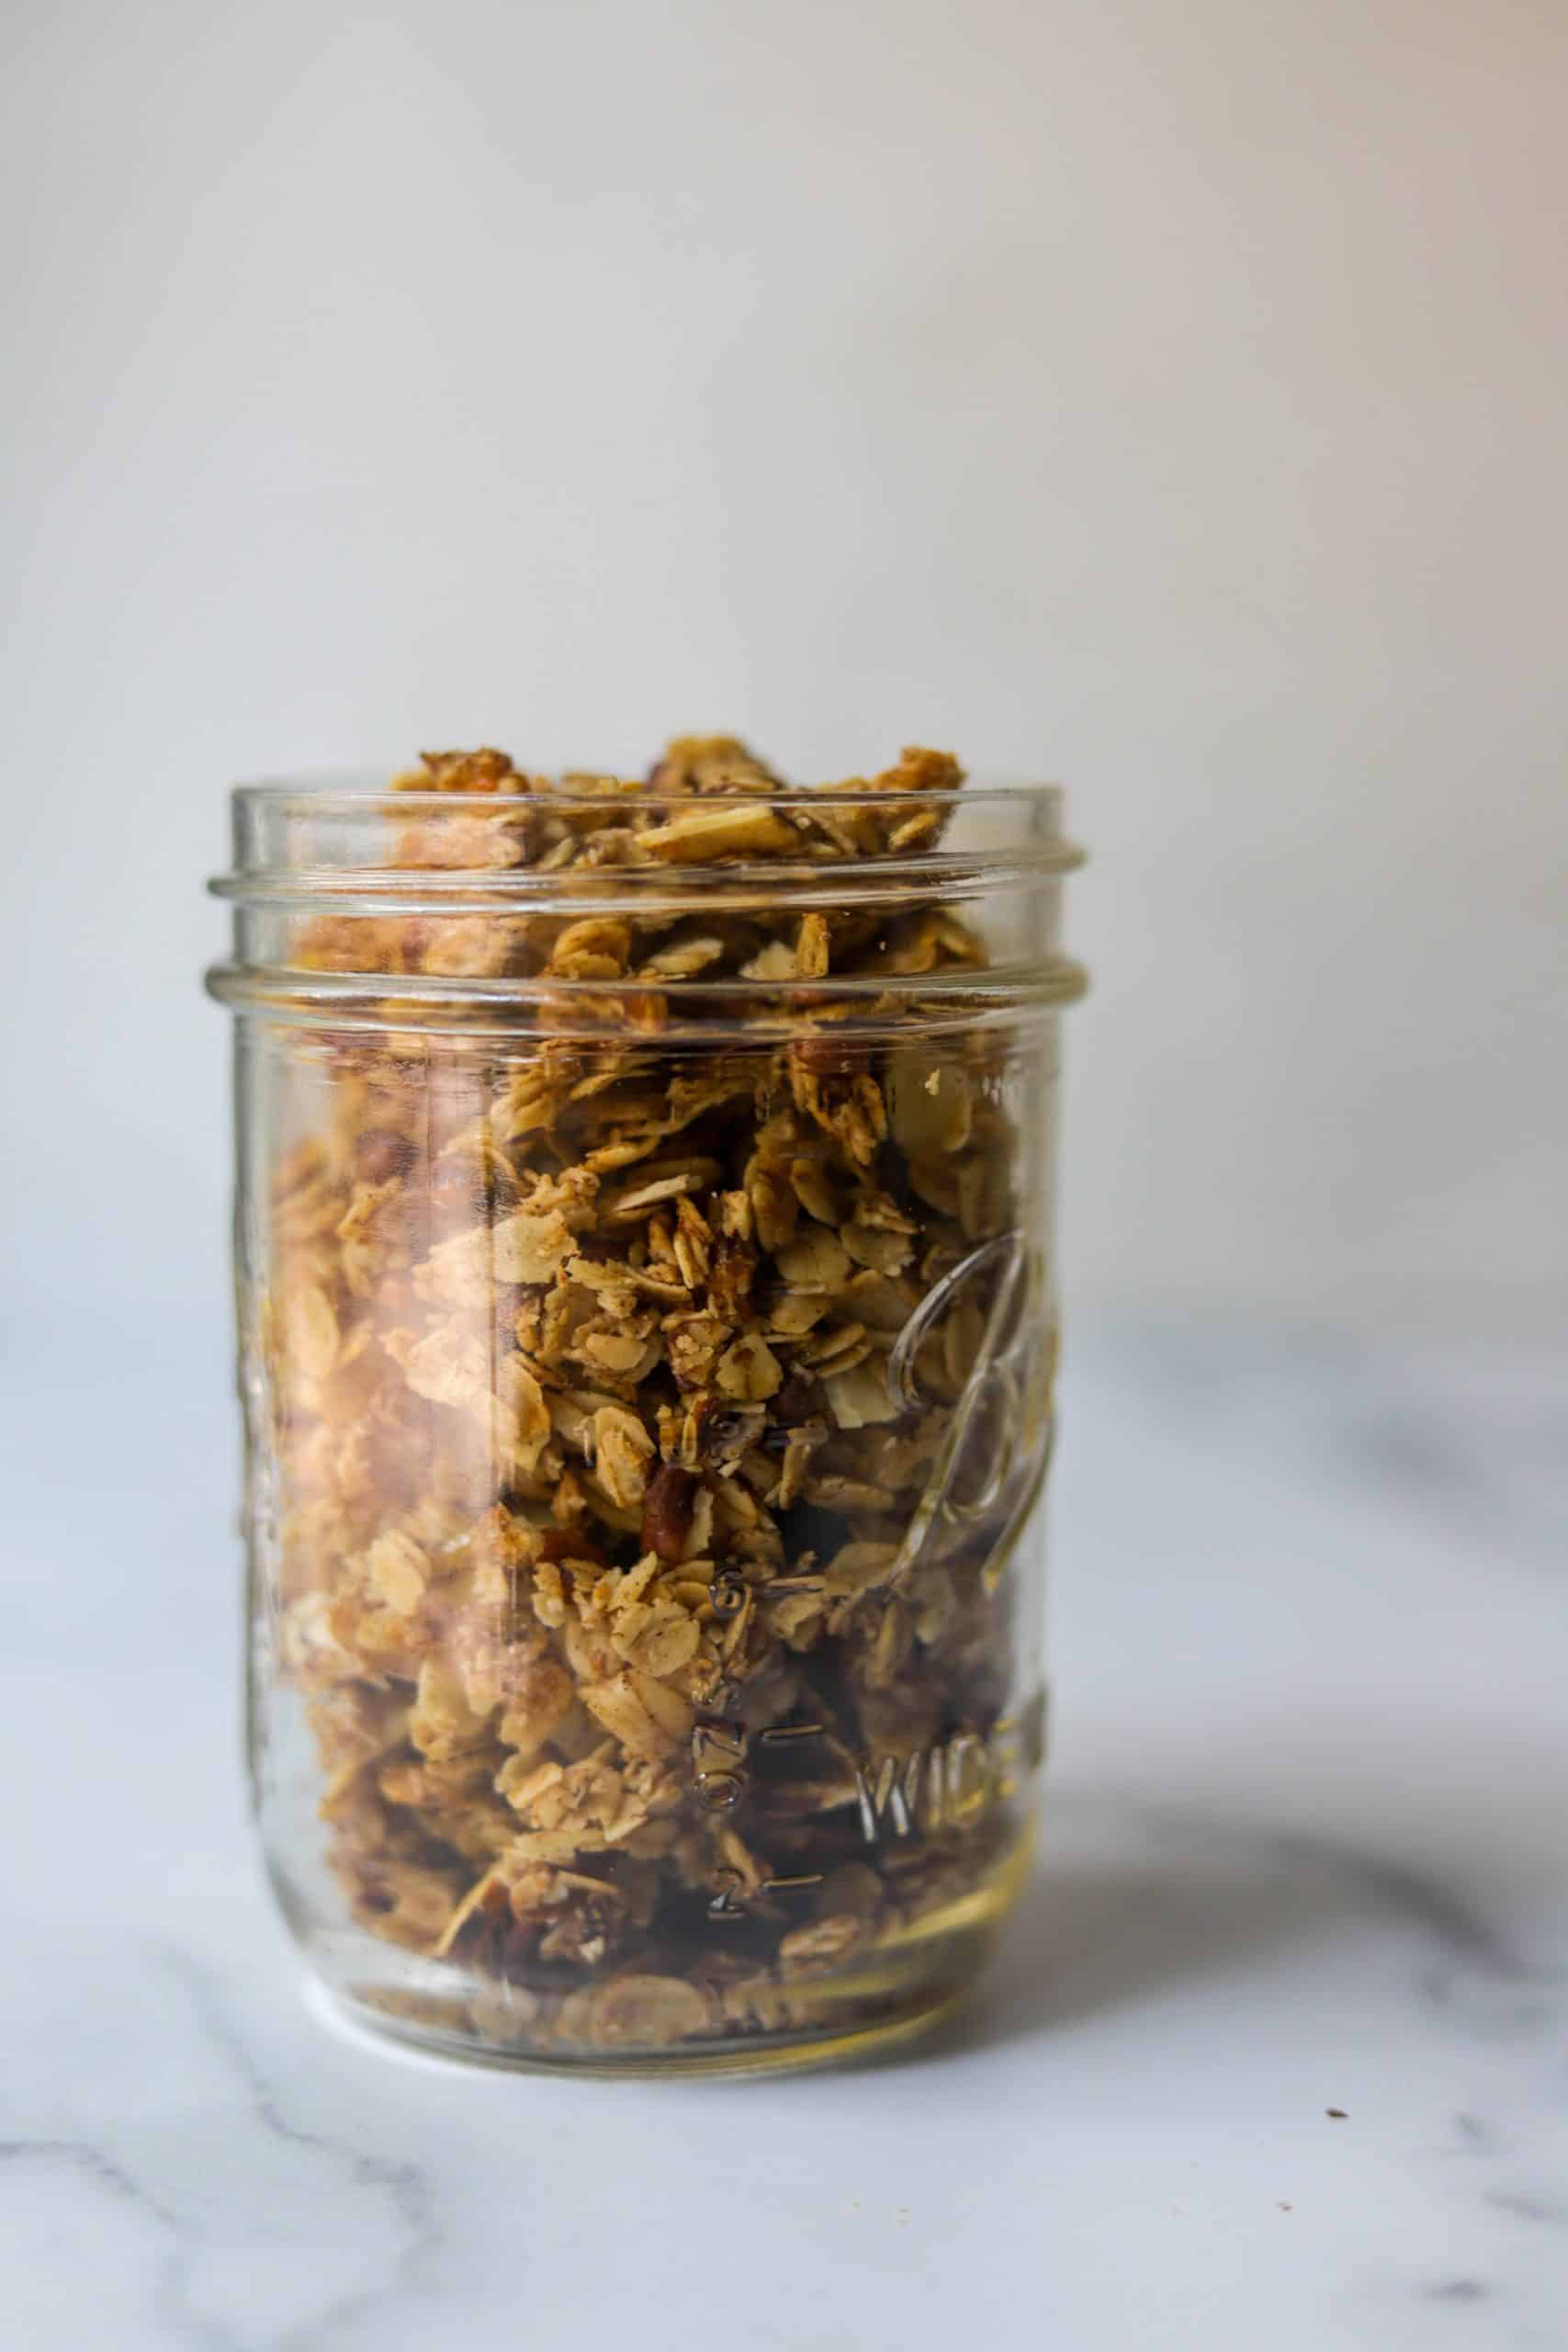 A jar of honey nut granola.